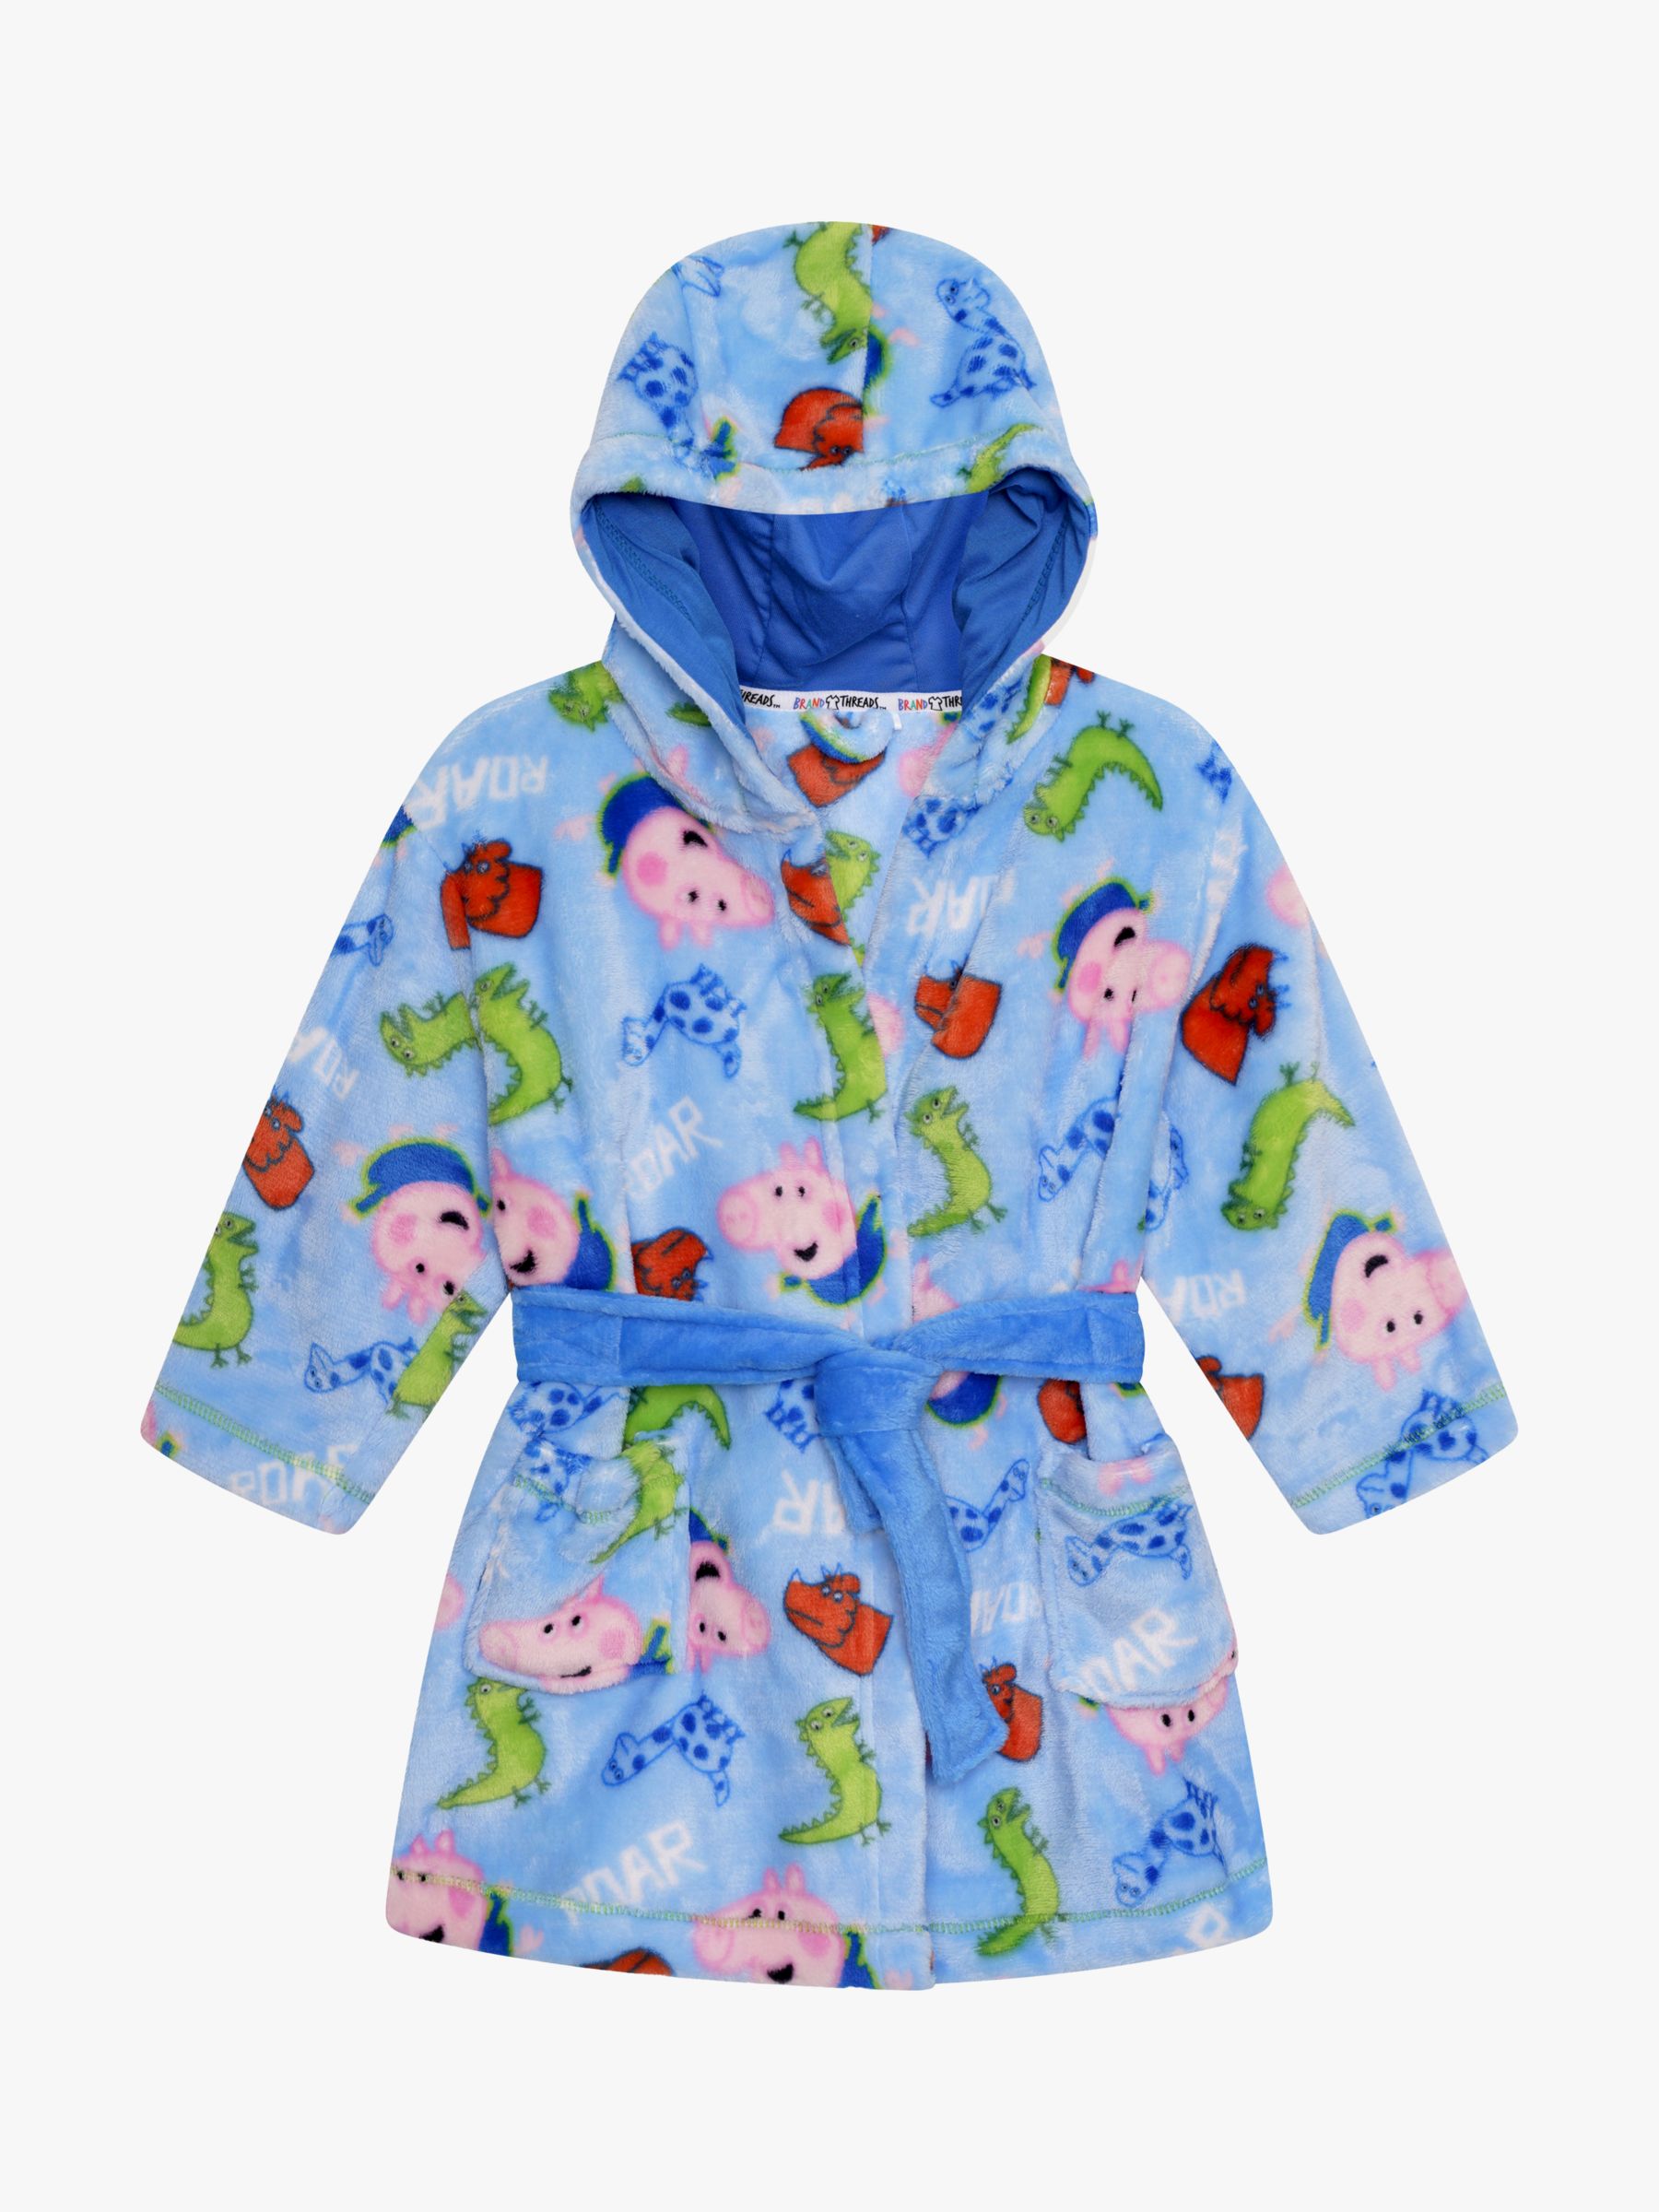 Buy Brand Threads Kids' George Pig Dressing Gown, Blue Online at johnlewis.com